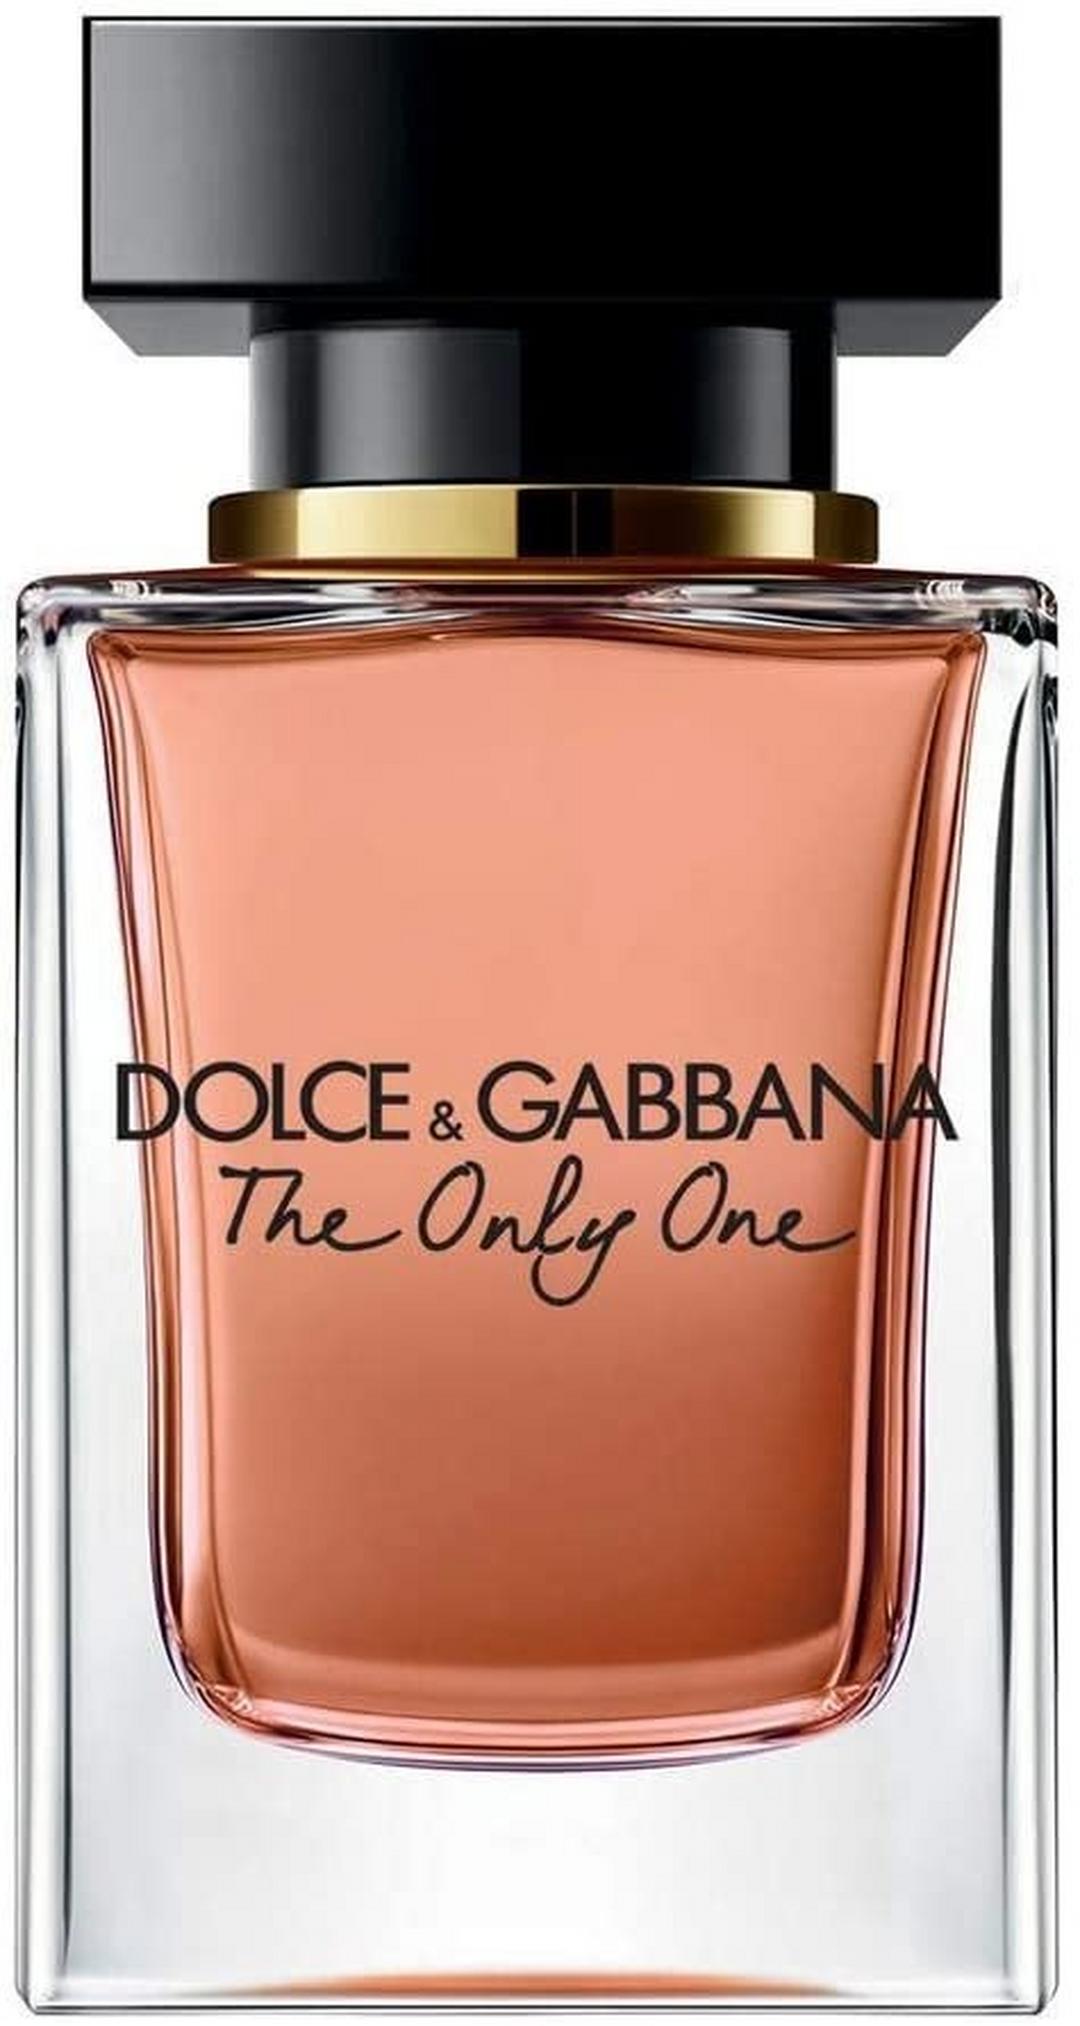 DOLCE & GABBANA The Only One – Eau De Parfum 100 ml